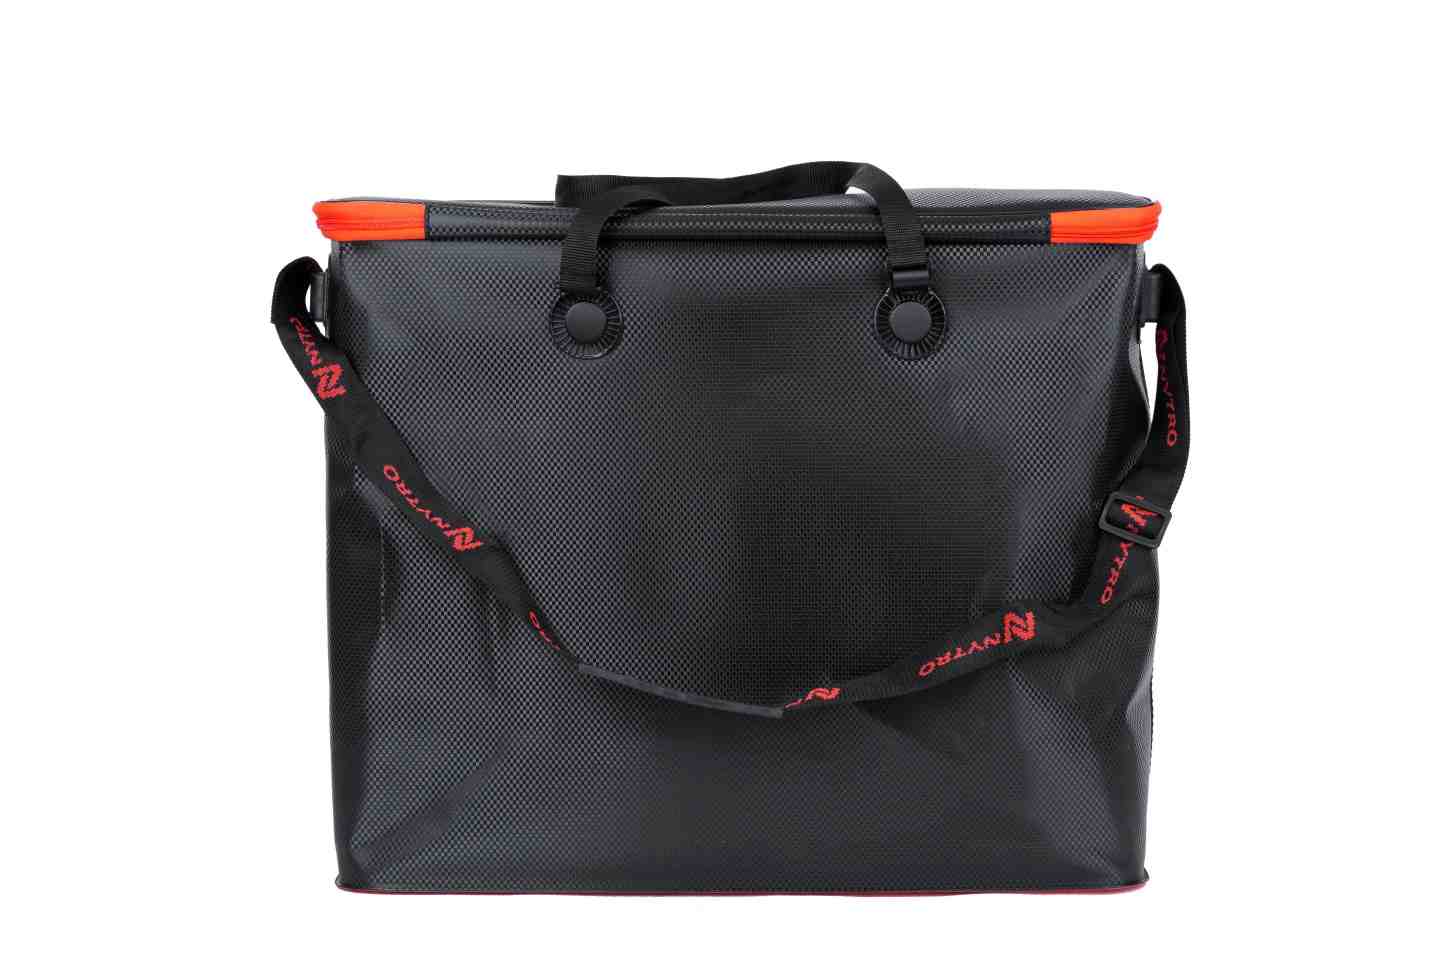 Nytro StarkX EVA Waterproof Keep net Bag XL